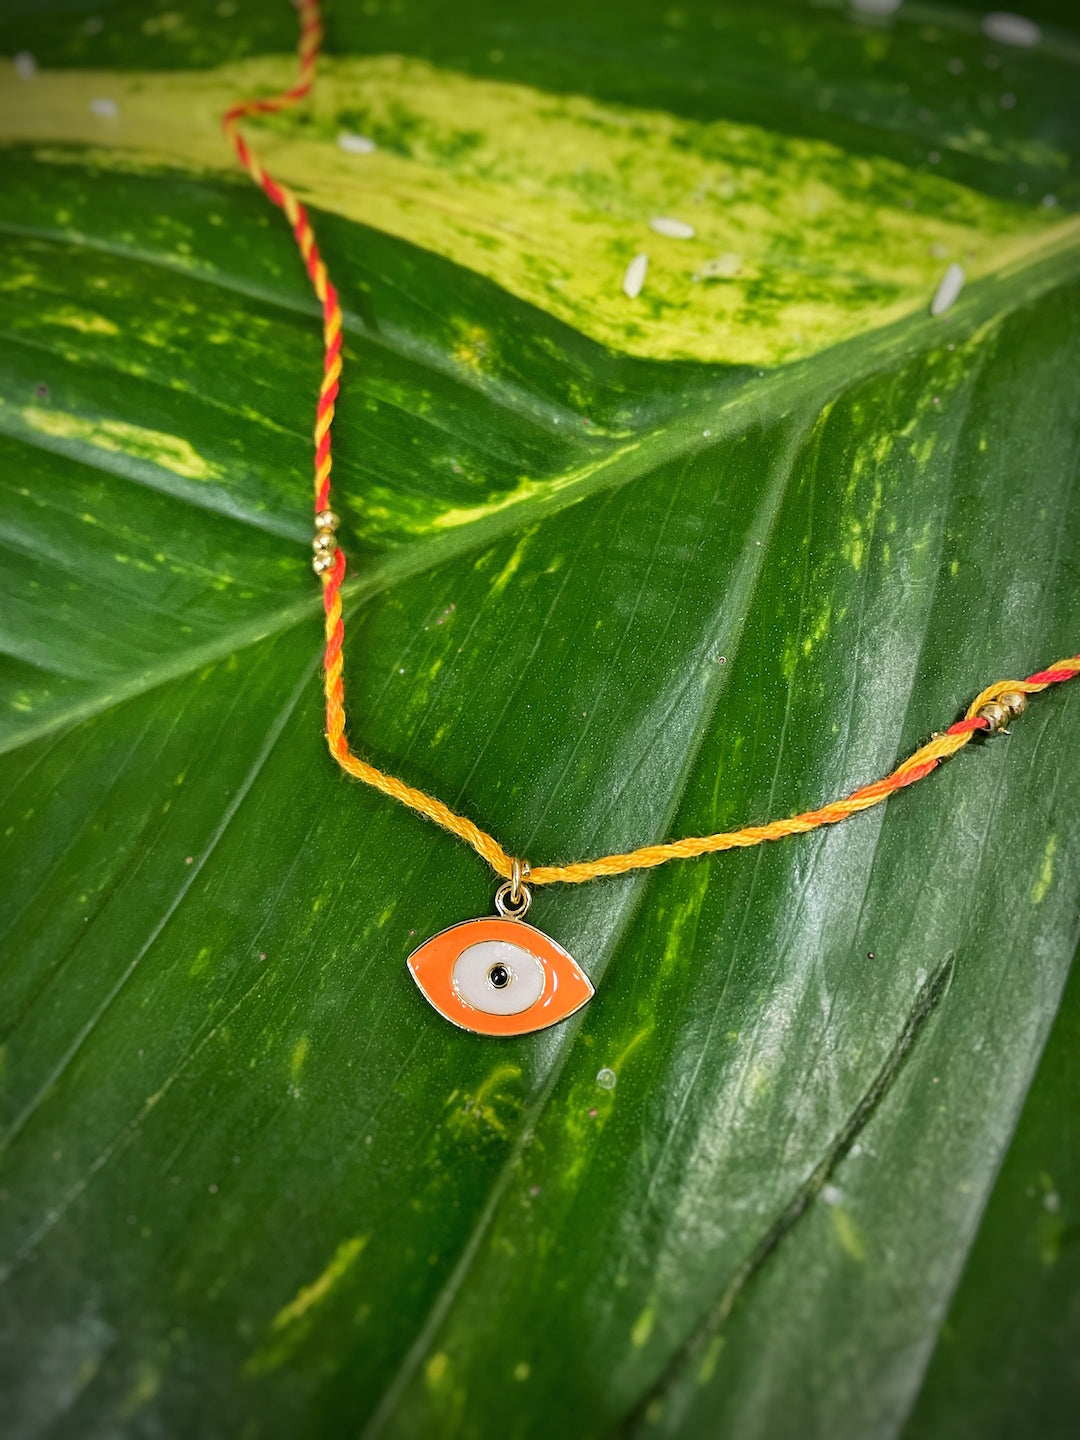 image for Fancy Orange Evil Eye Charm Designer Rakhi With Multicolored Thread For Raksha Bandhan Celebration